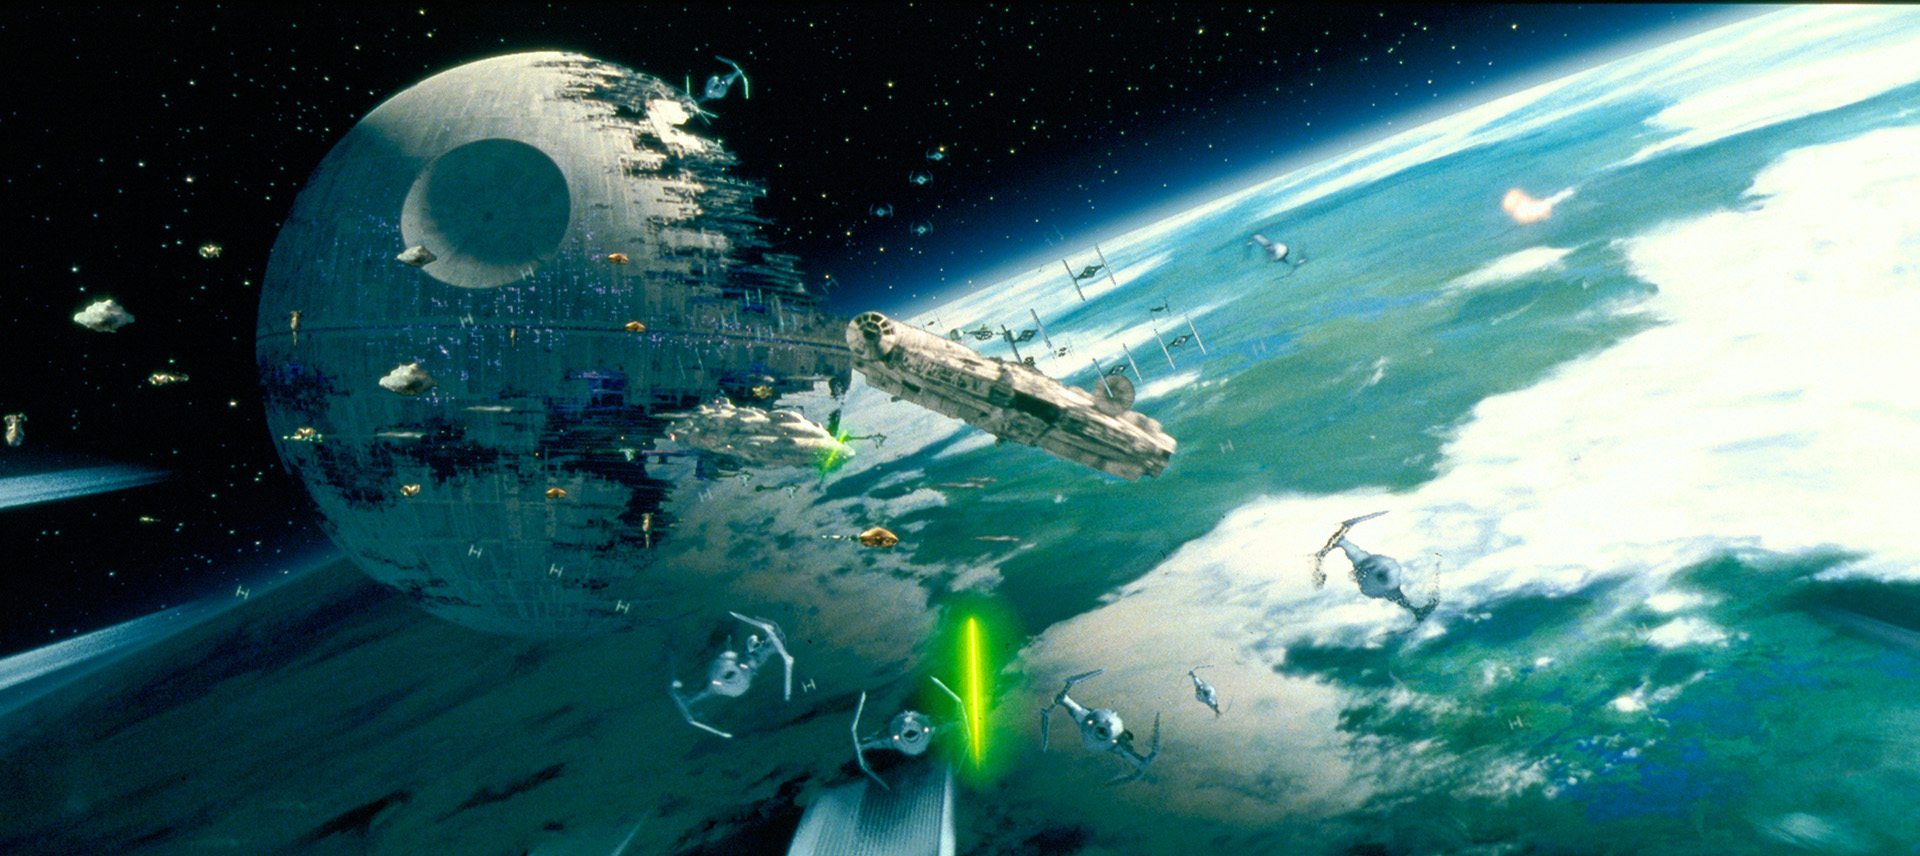 Star Wars Episode 6: Return of the Jedi | Lucasfilm.com